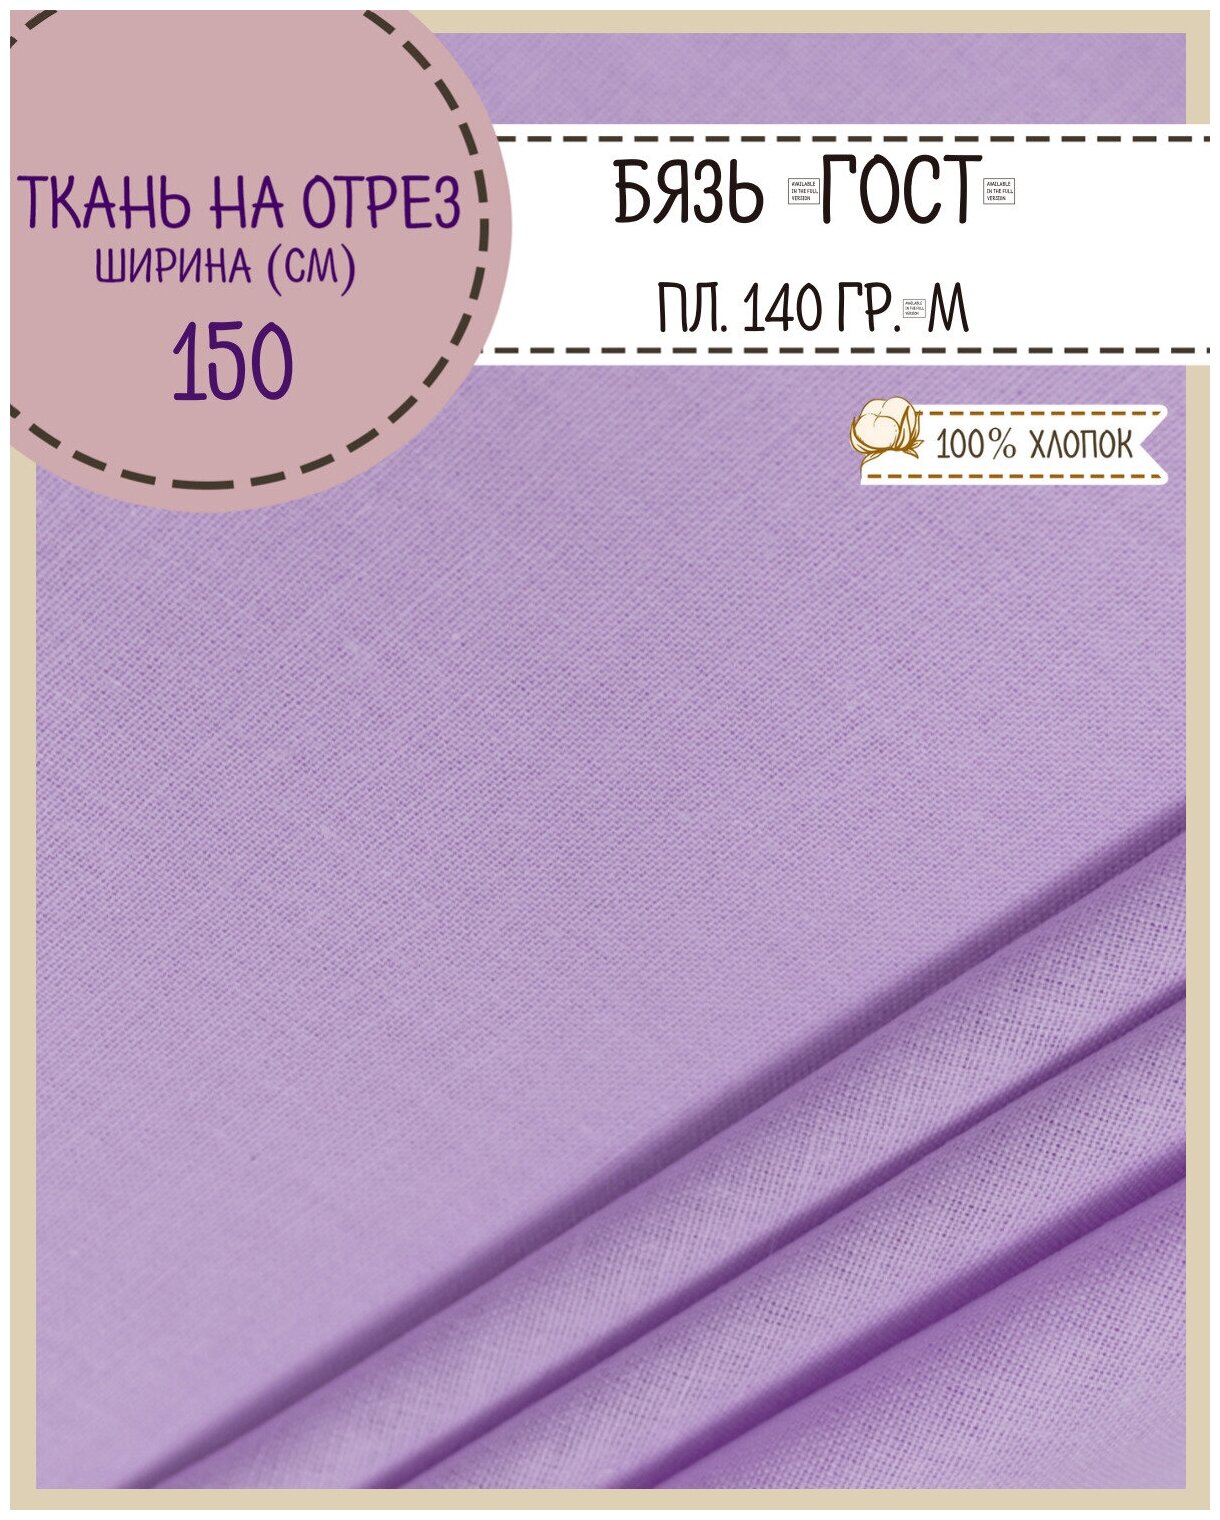 Ткань Бязь ГОСТ однотонная, цв. сиреневый, 100% хлопок, пл. 140 г/м2, ш-150 см, на отрез, цена за пог. метр